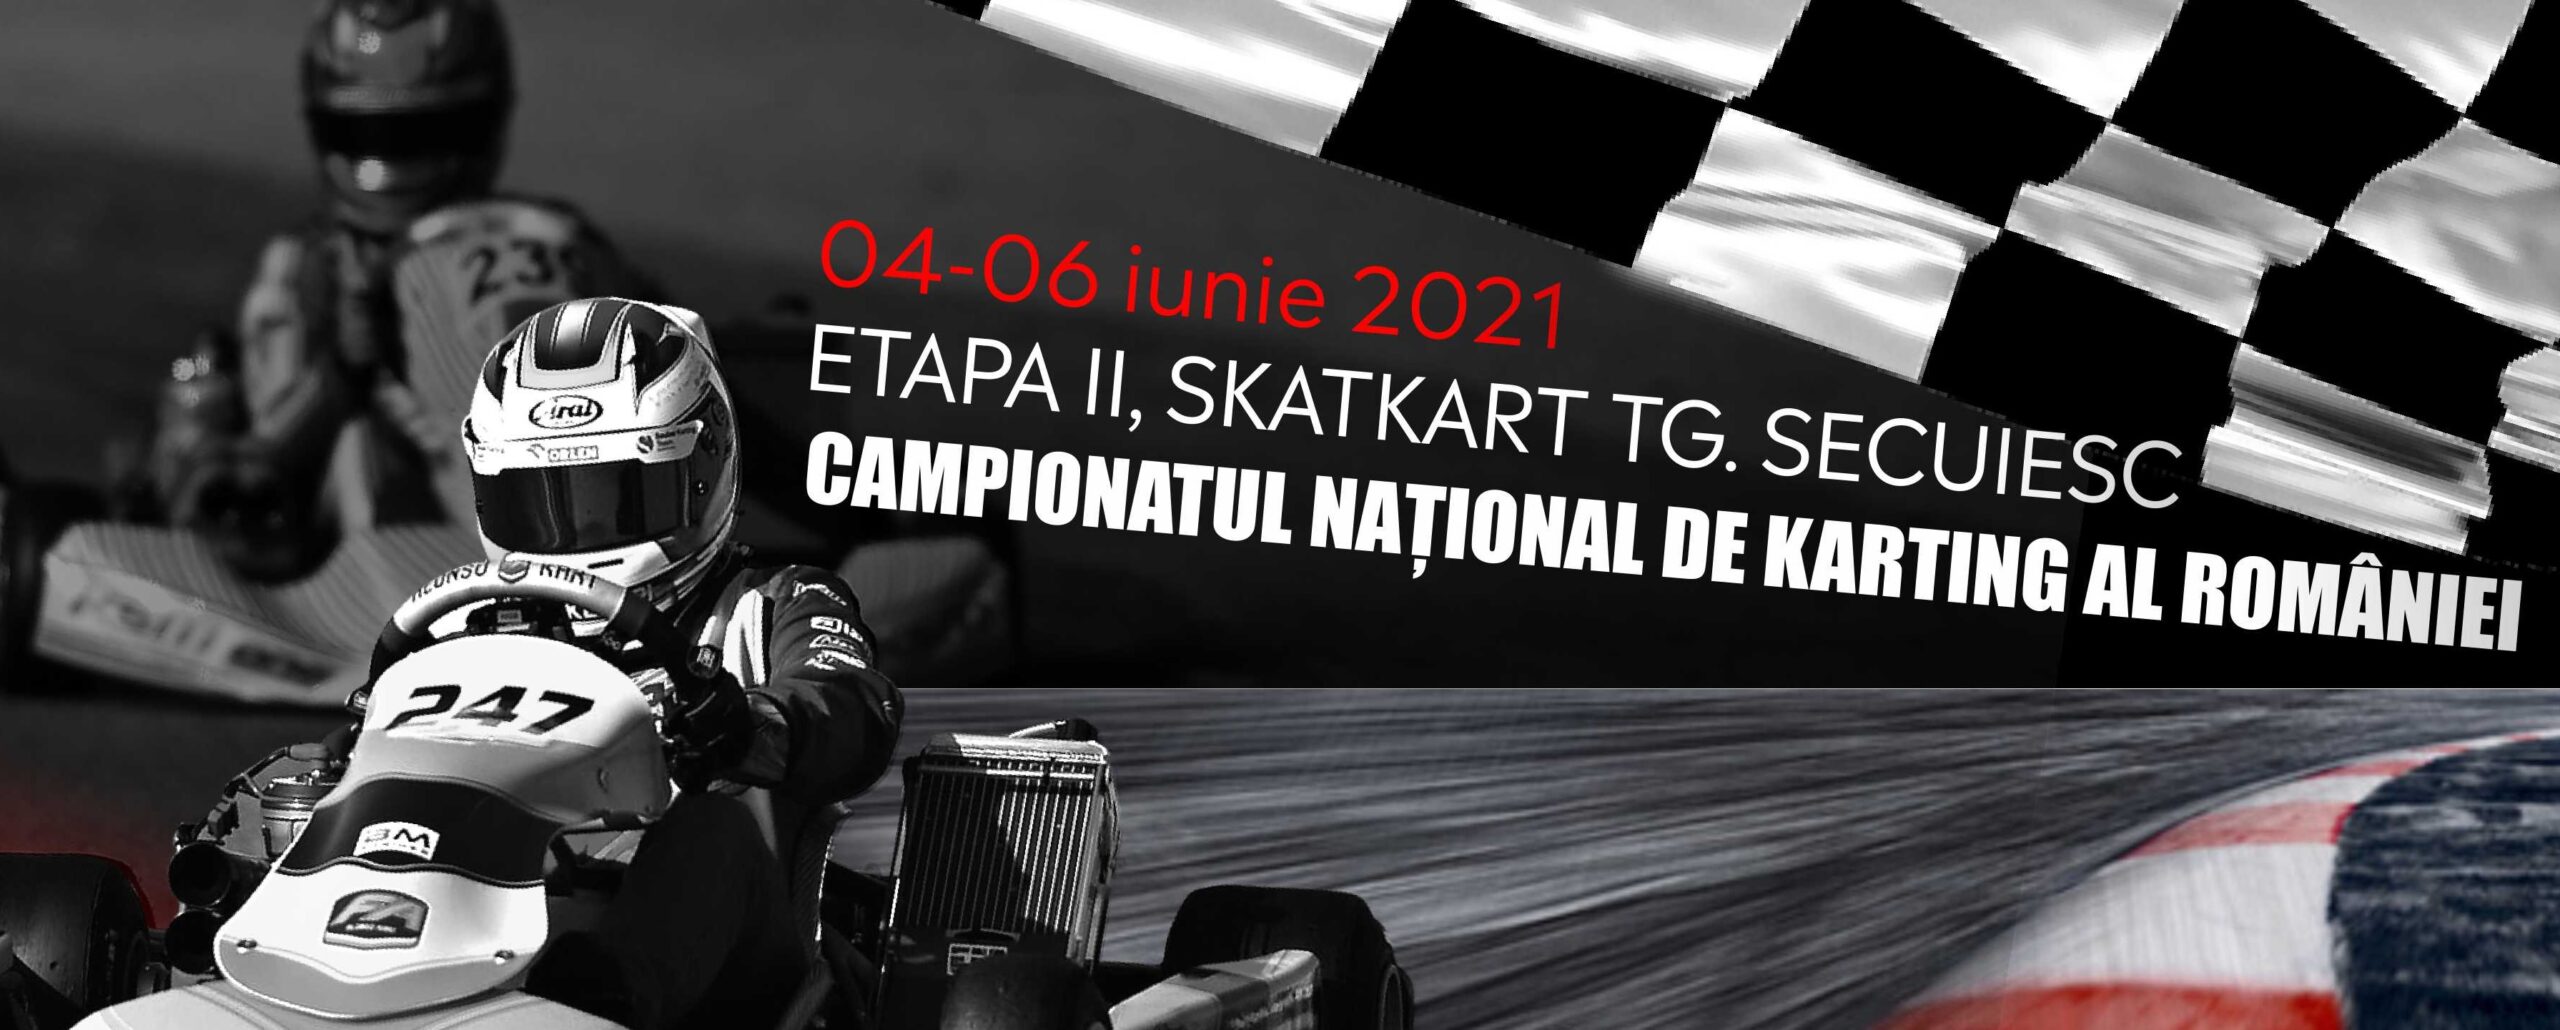 LIVE VIDEO Campionatul Naţional de Karting, etapa a 2-a